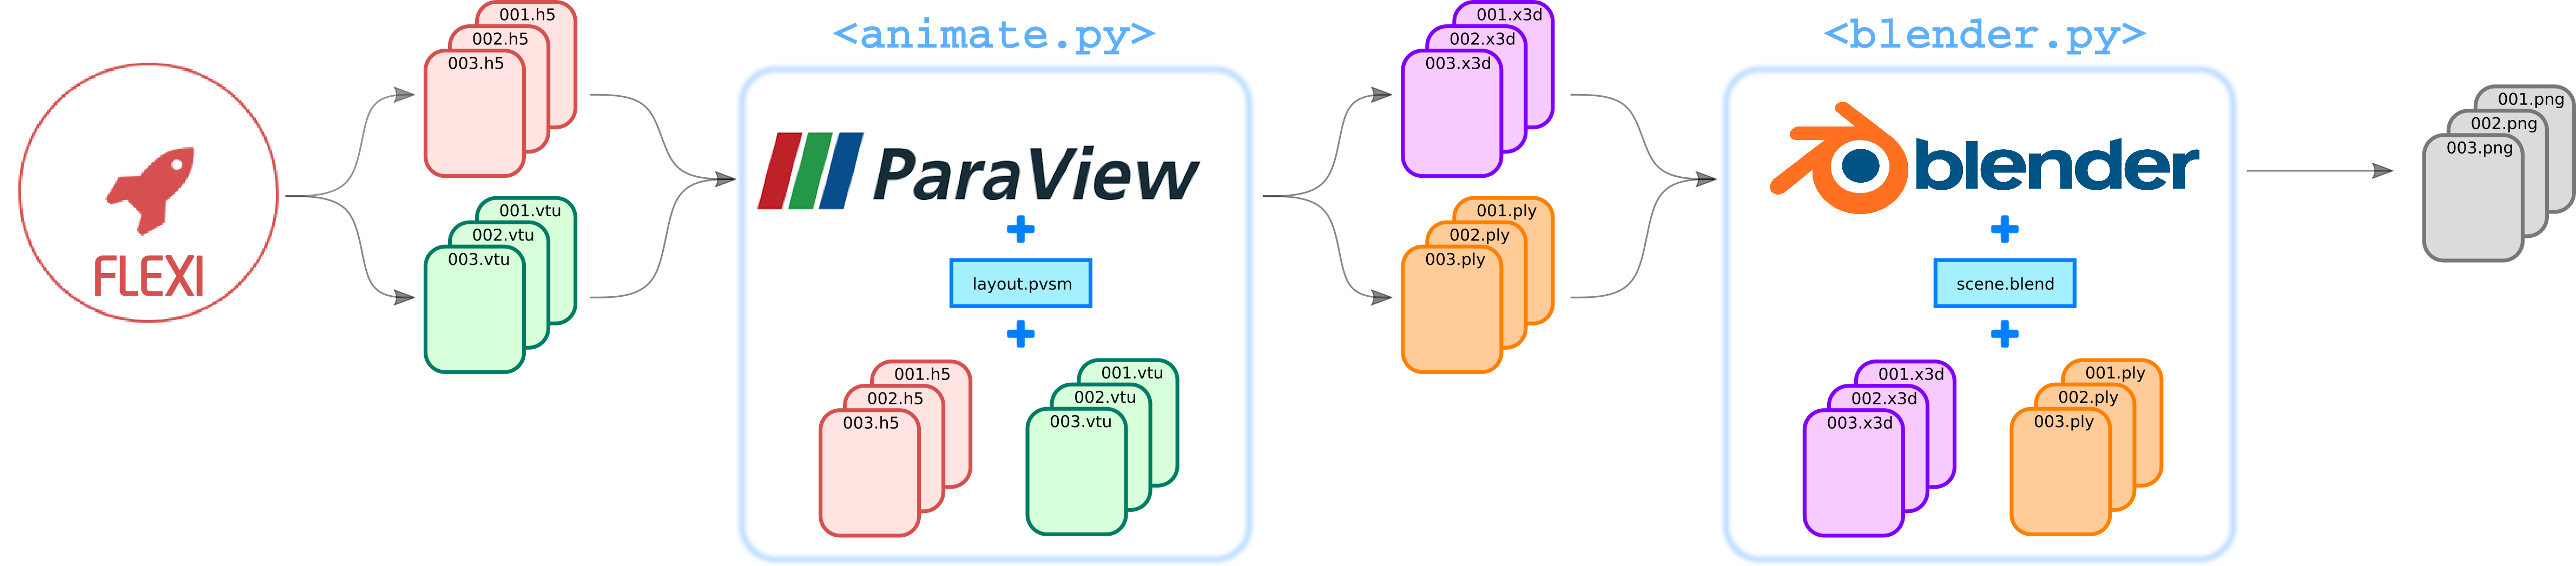 Visualization pipeline workflow